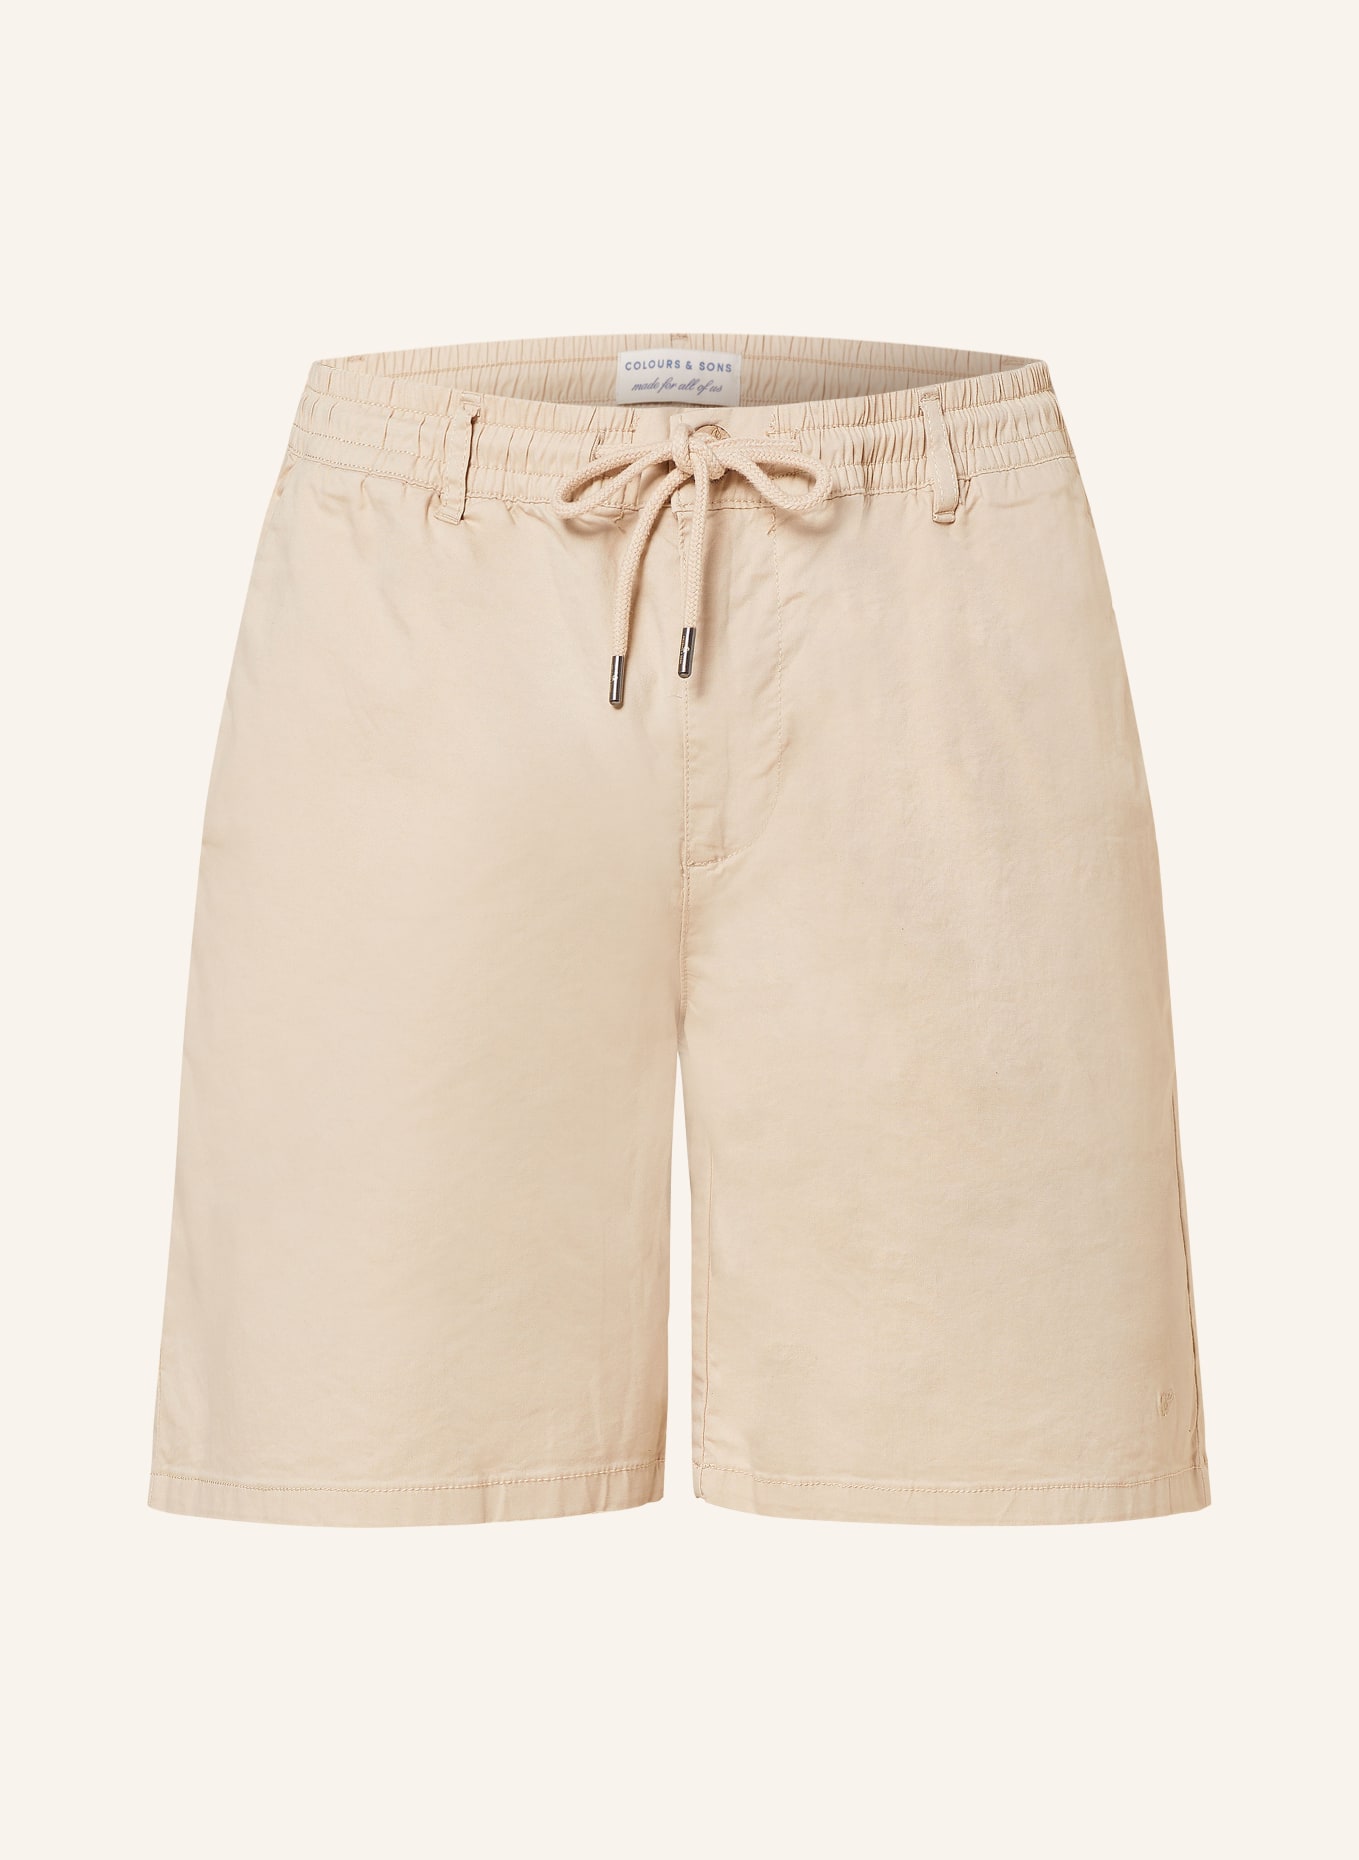 COLOURS & SONS Shorts, Farbe: CAMEL (Bild 1)